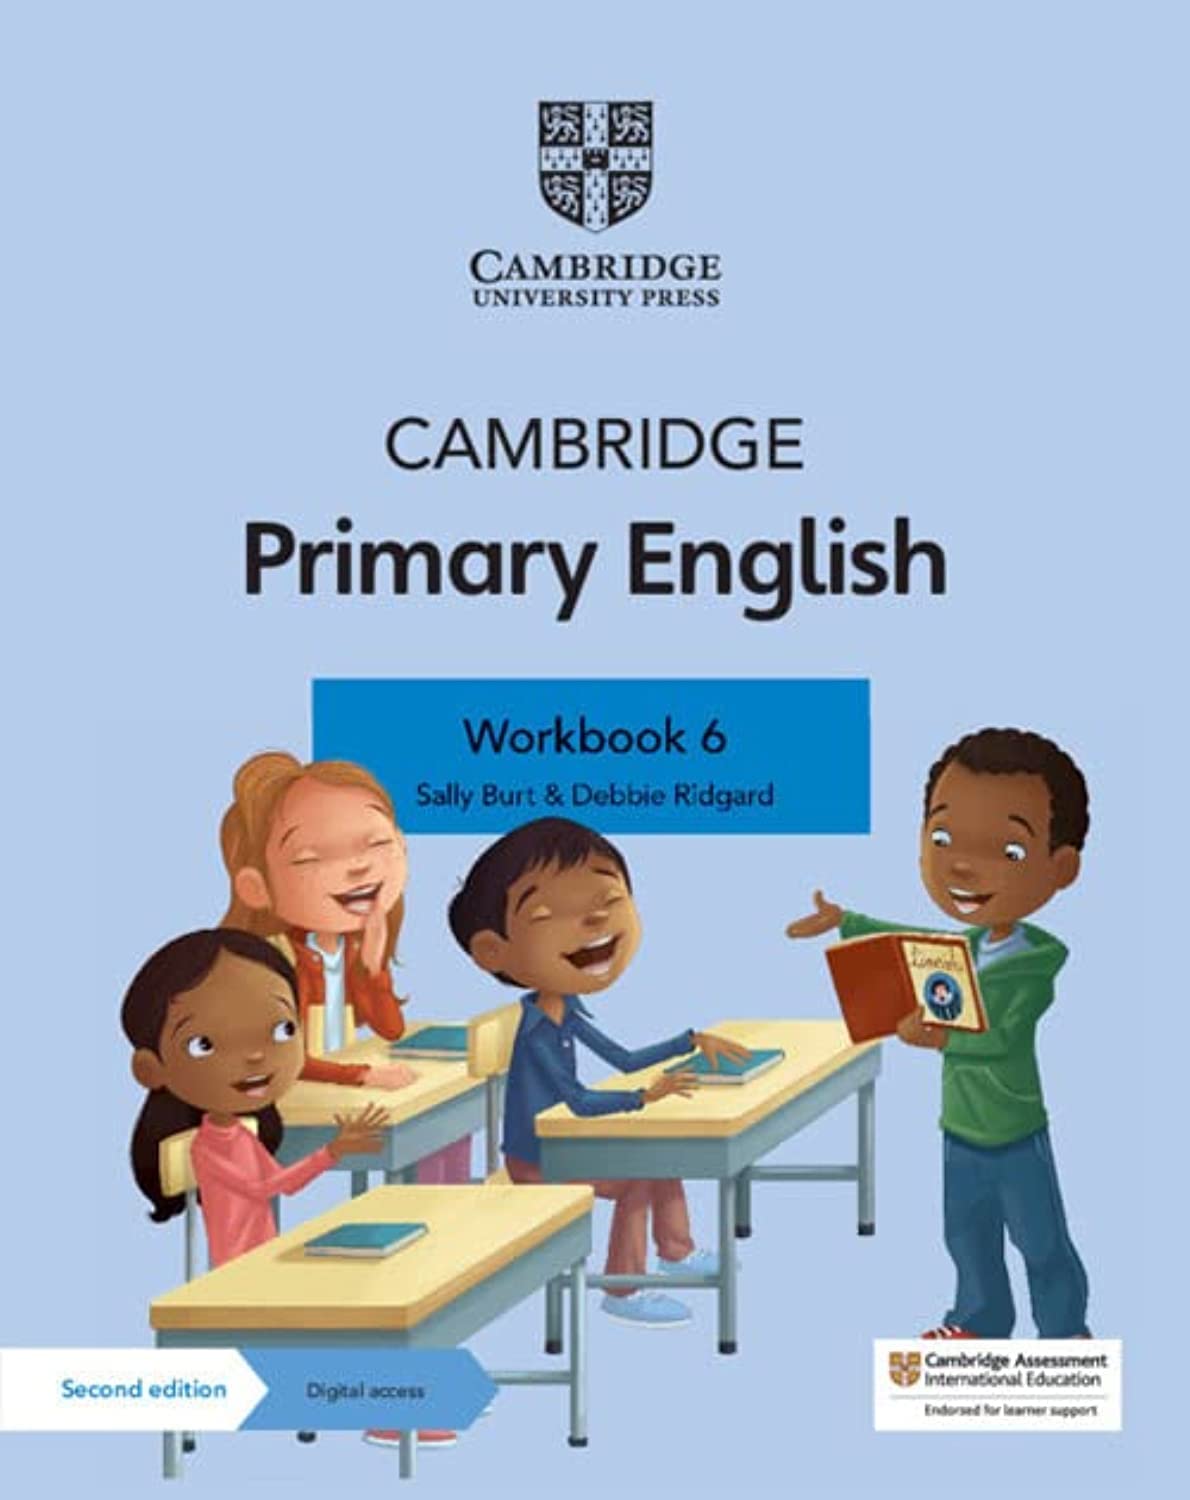 Cambridge Primary English Workbook 6 with Digital Access (1 Year) | Sally Burt, Debbie Ridgard